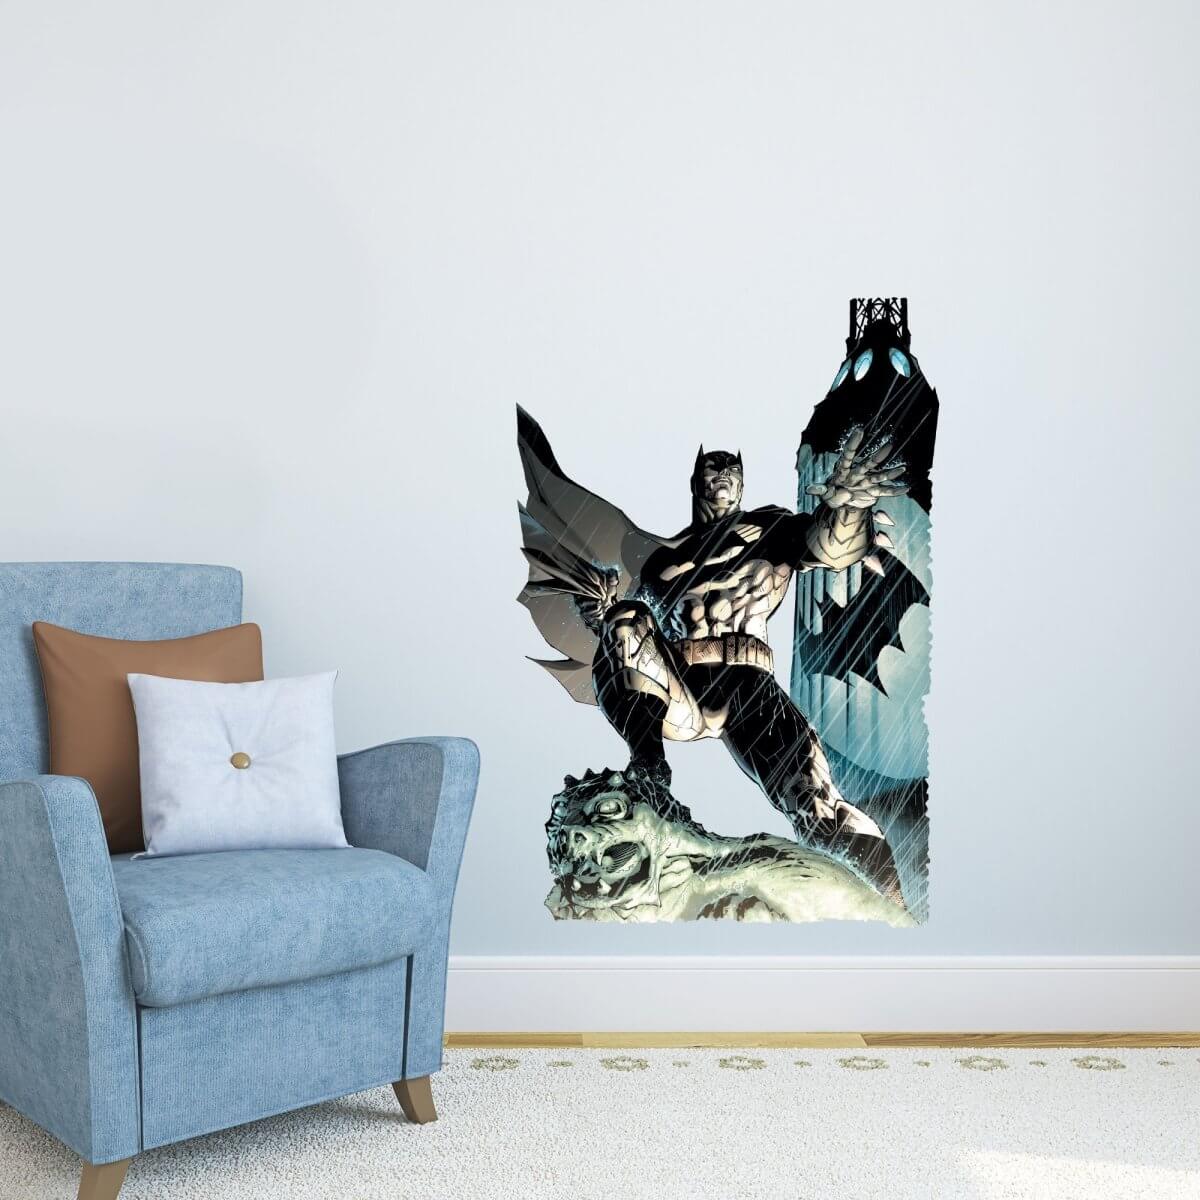 Kismet Decals New 52 Batman #2 Comic Cover Series Licensed Wall Sticker - Easy DIY Home & Room Decor Wall Art - Kismet Decals